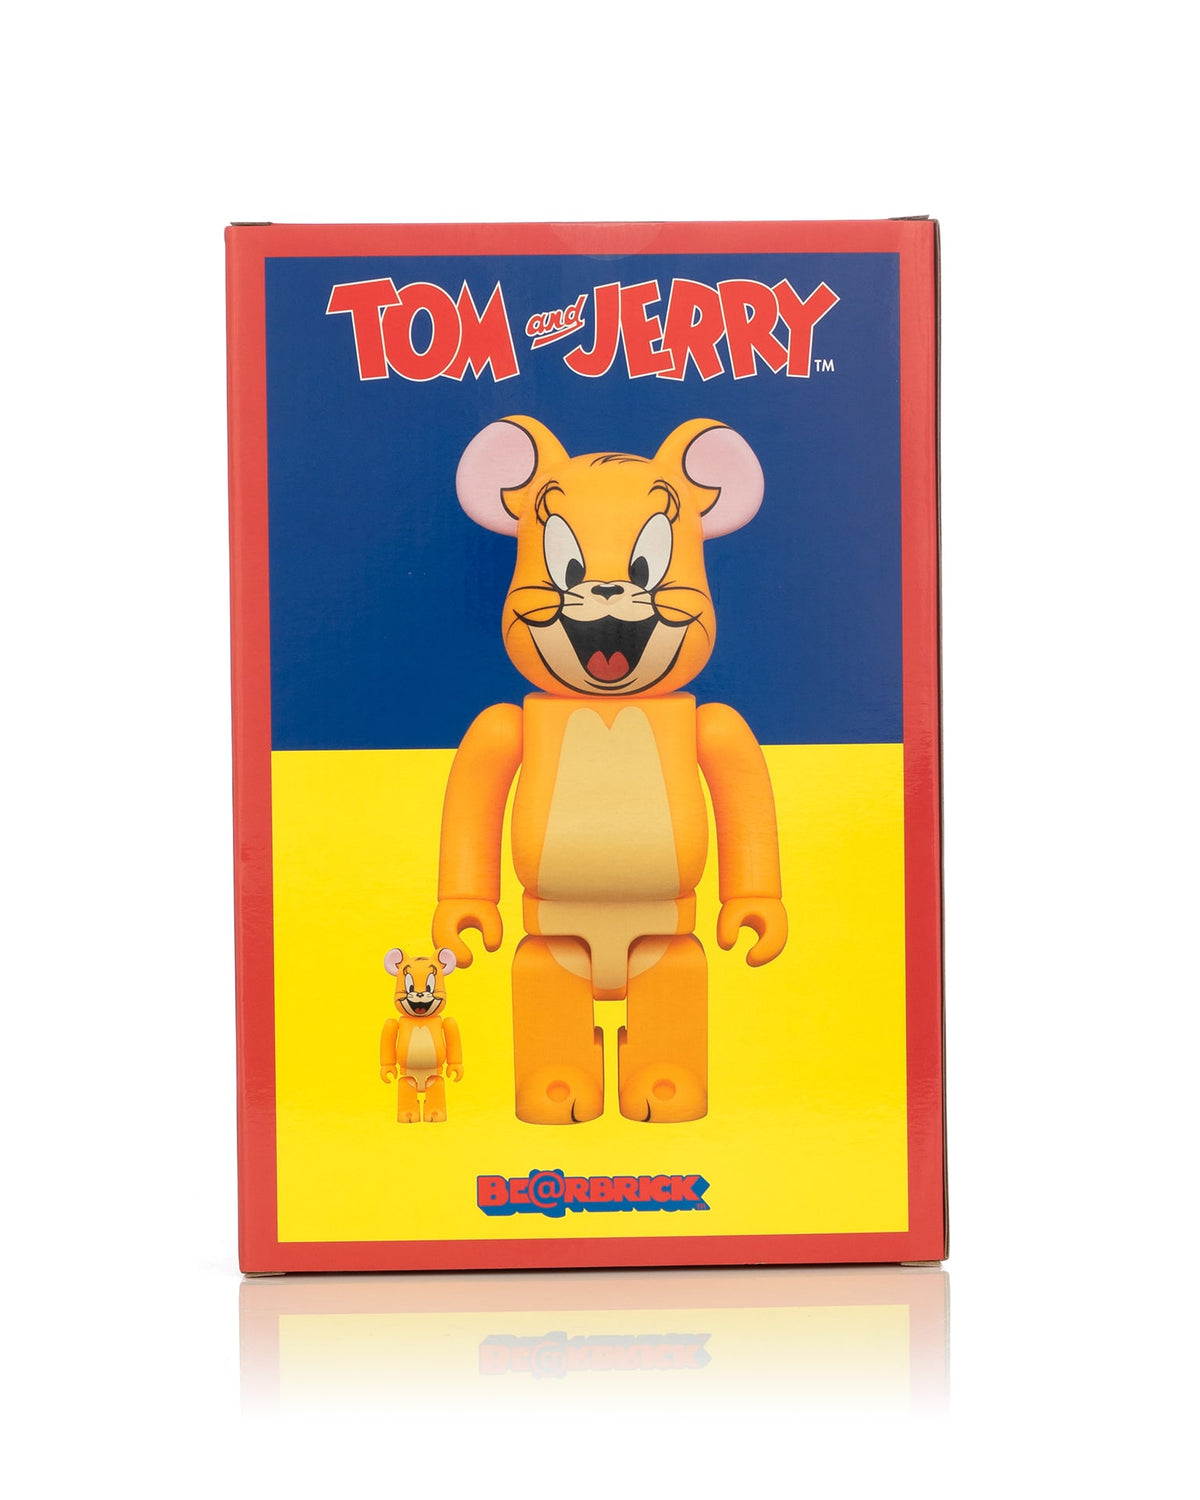 Medicom Toy | Be@rbrick Tom & Jerry  400% + 100% Jerry - Concrete